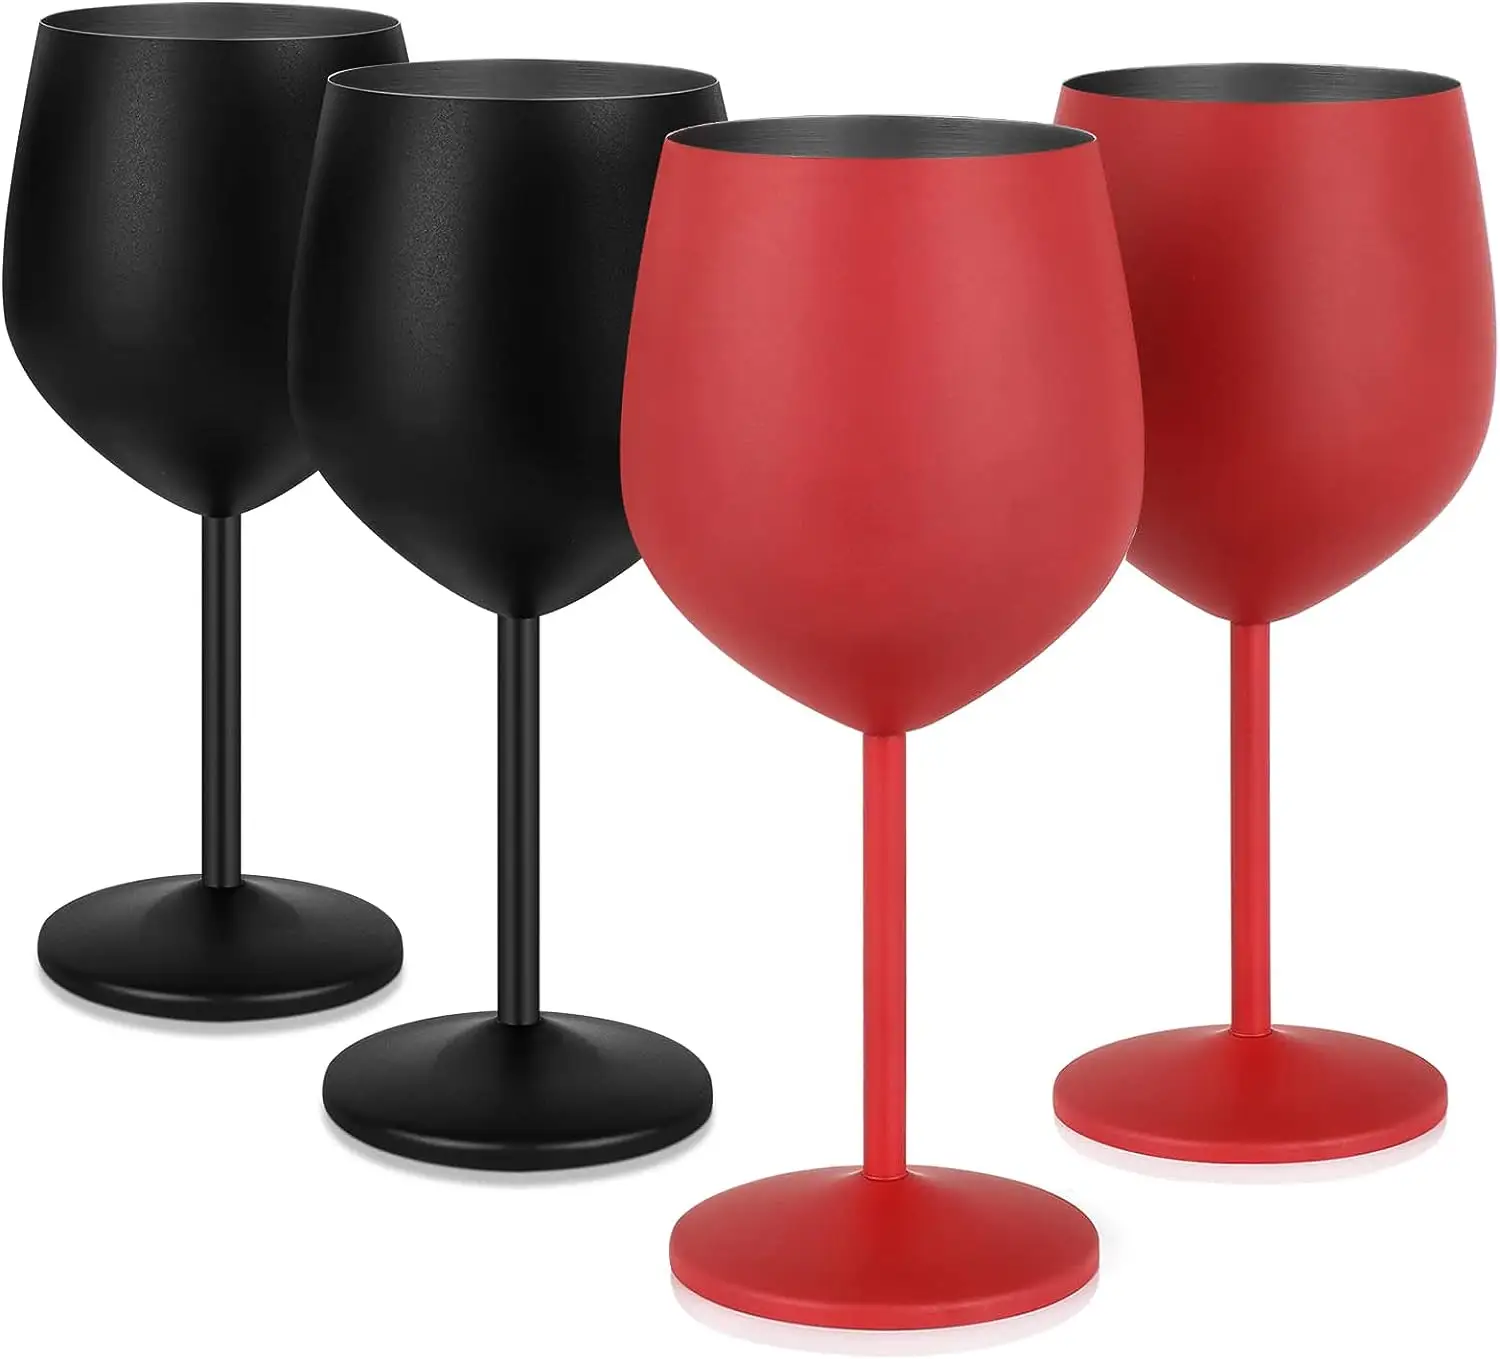 Topkwaliteit Verkoop Meest Populaire Goud Roestvrij Staal Rode Beker Champagne Beker Drinkglas